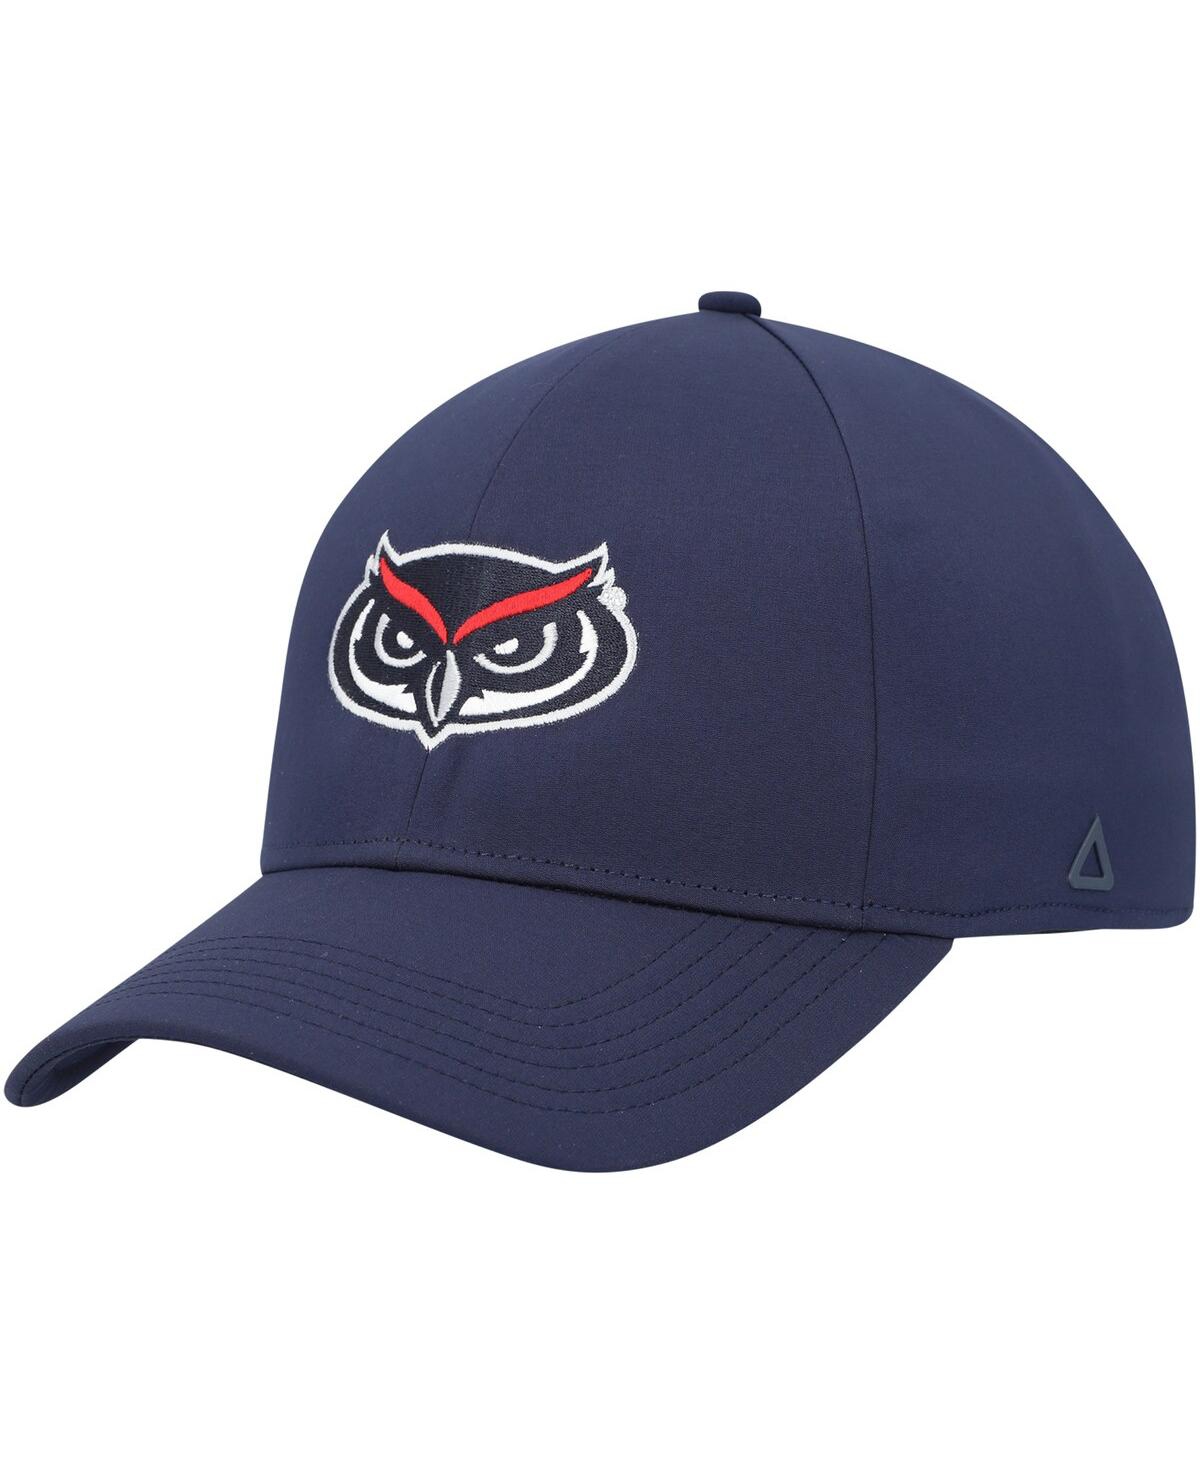 Shop Ahead Men's  Navy Fau Owls Buckner Flex Hat